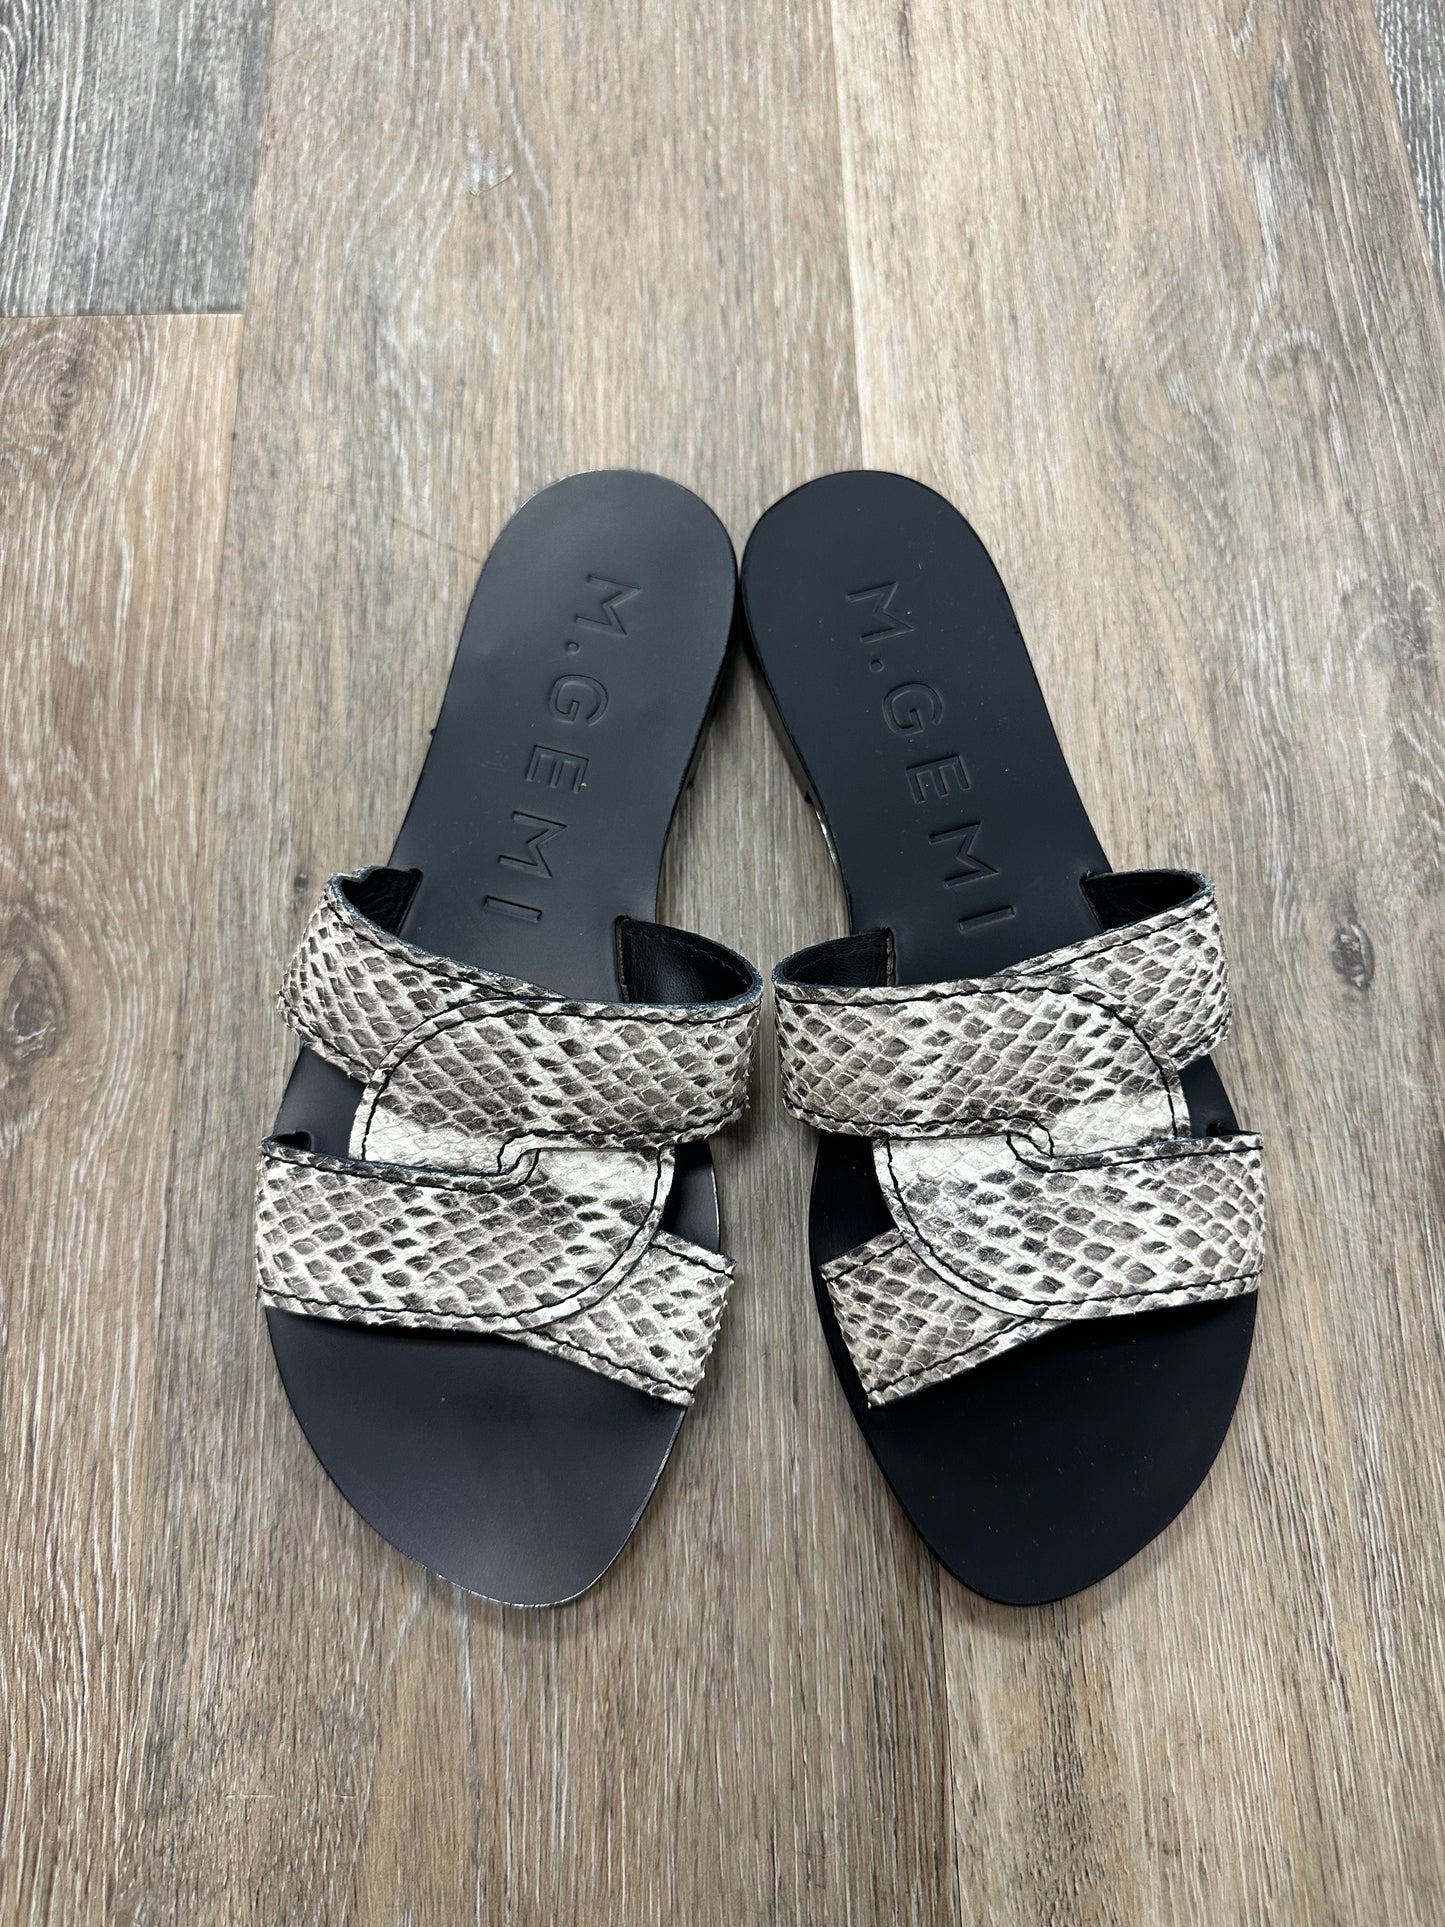 Sandals Designer By M.Gemi  Size: 6